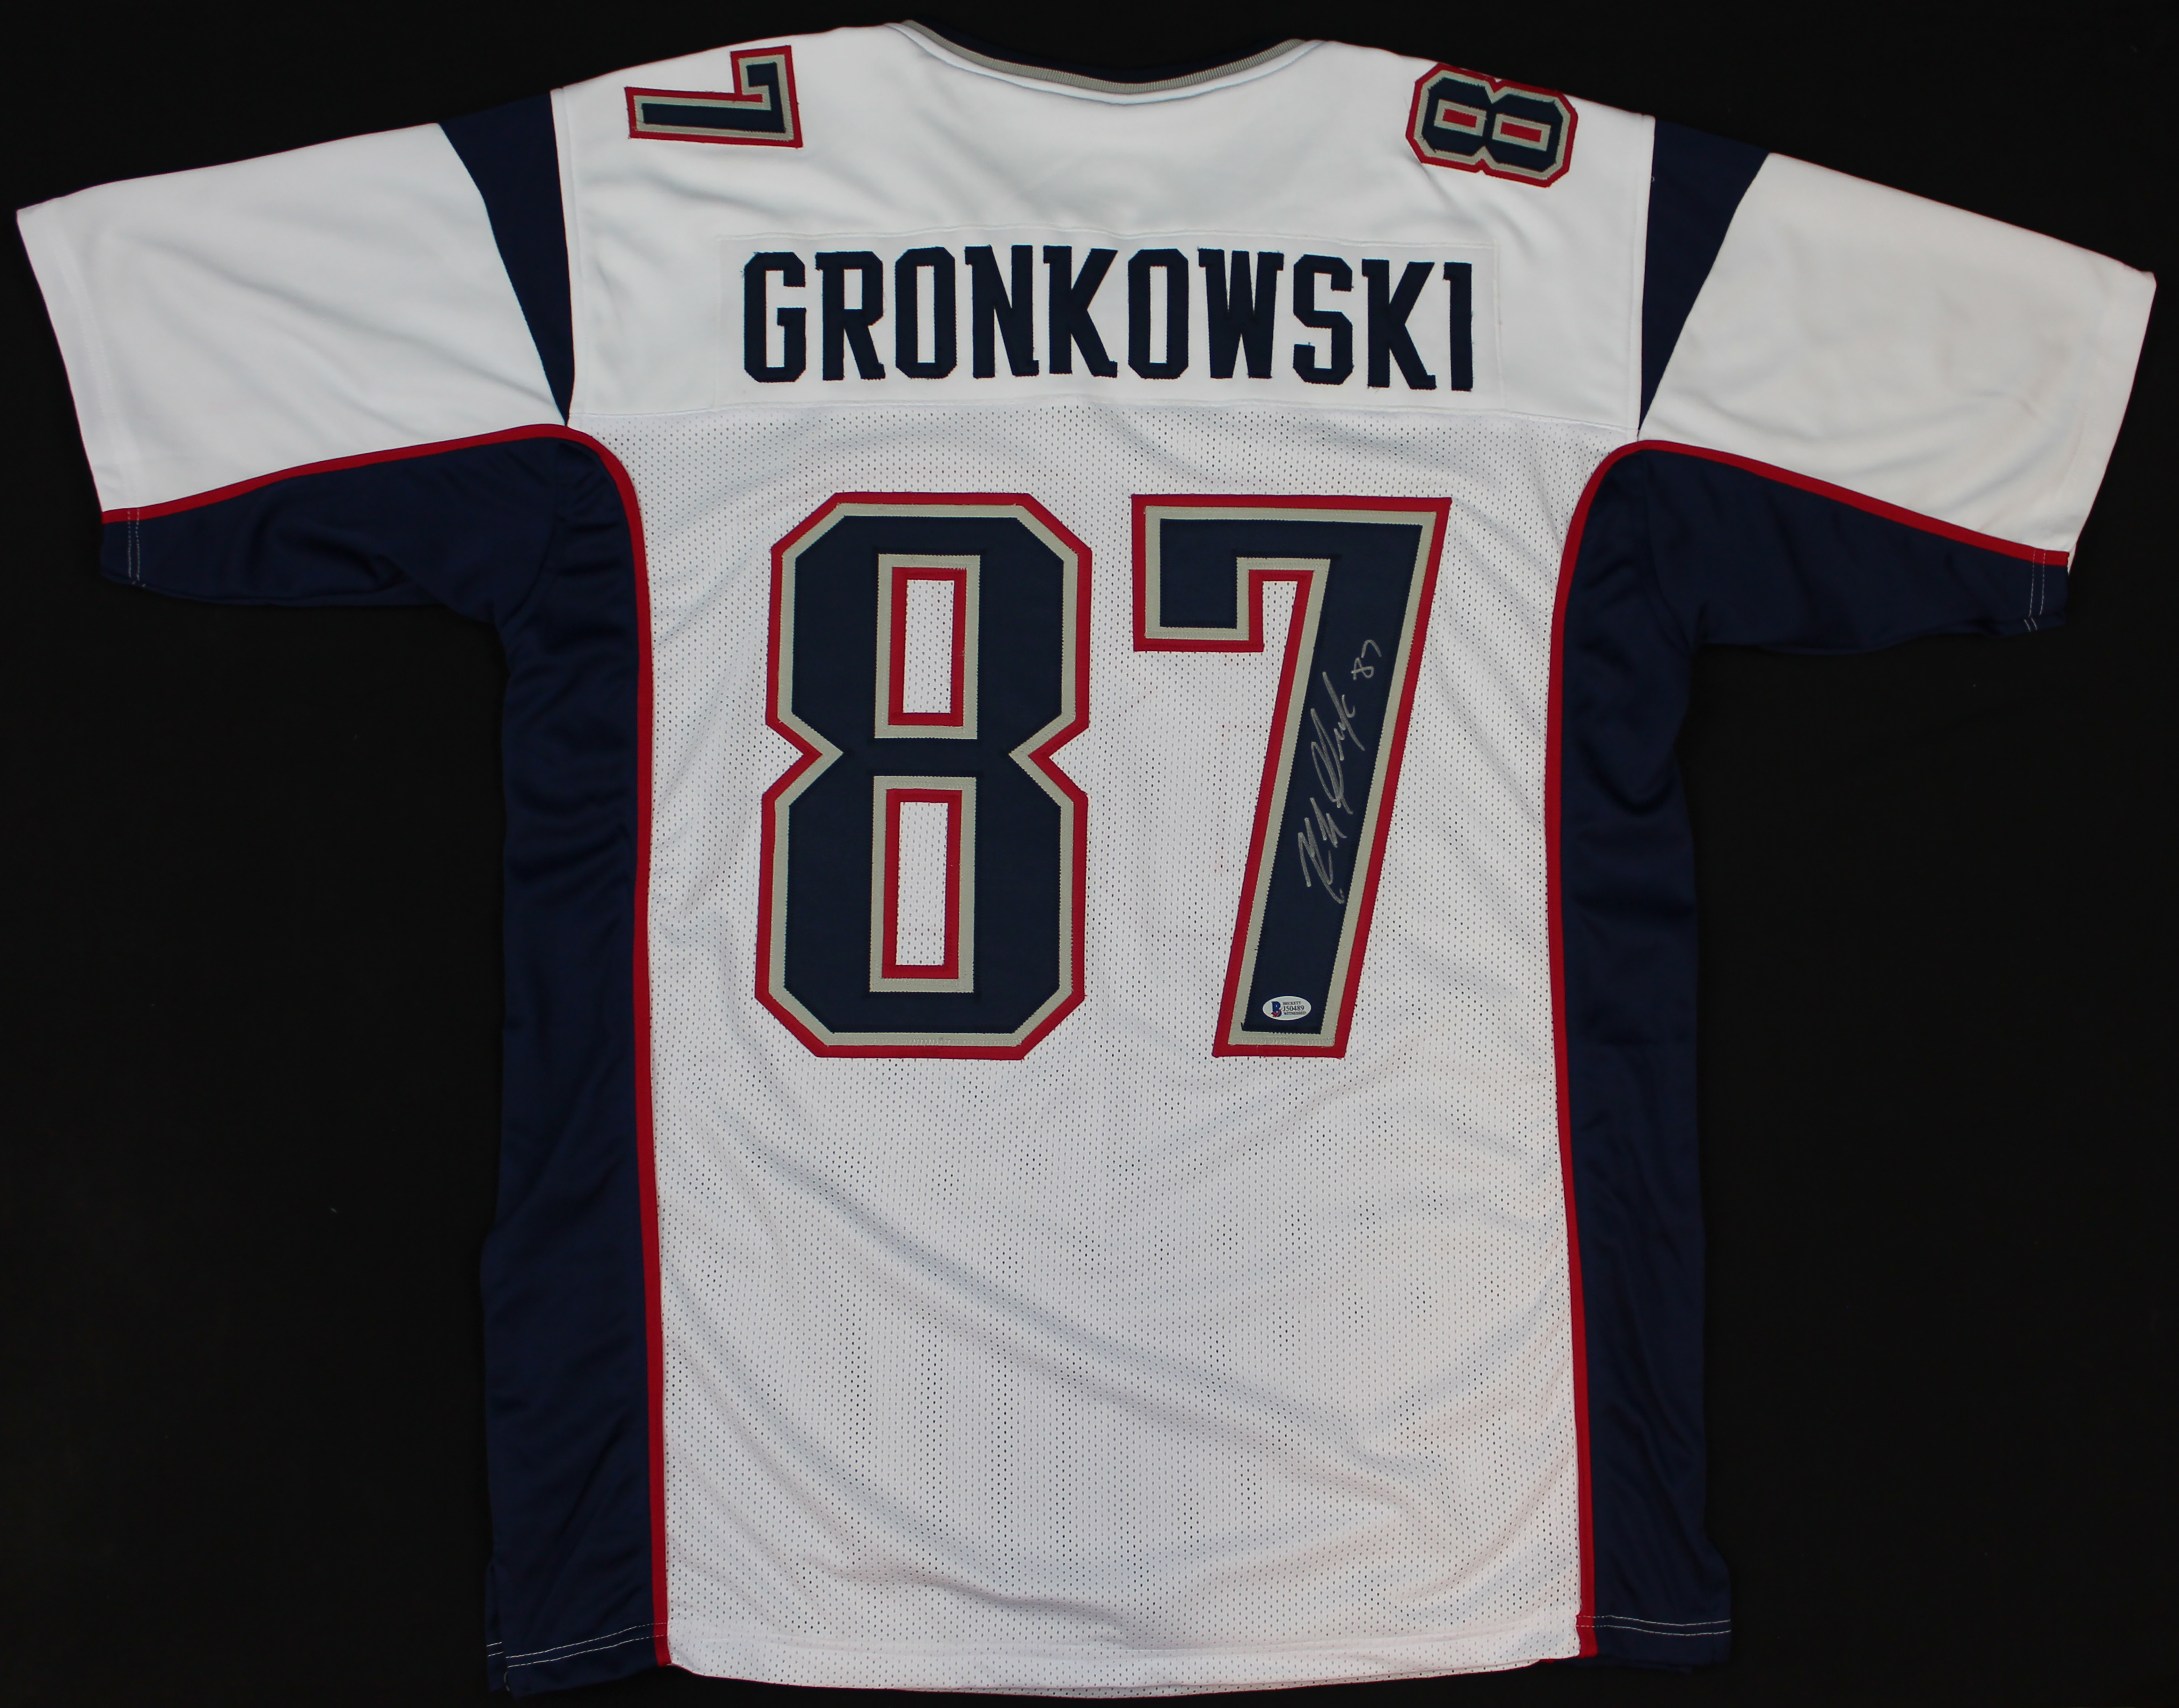 gronkowski autographed jersey